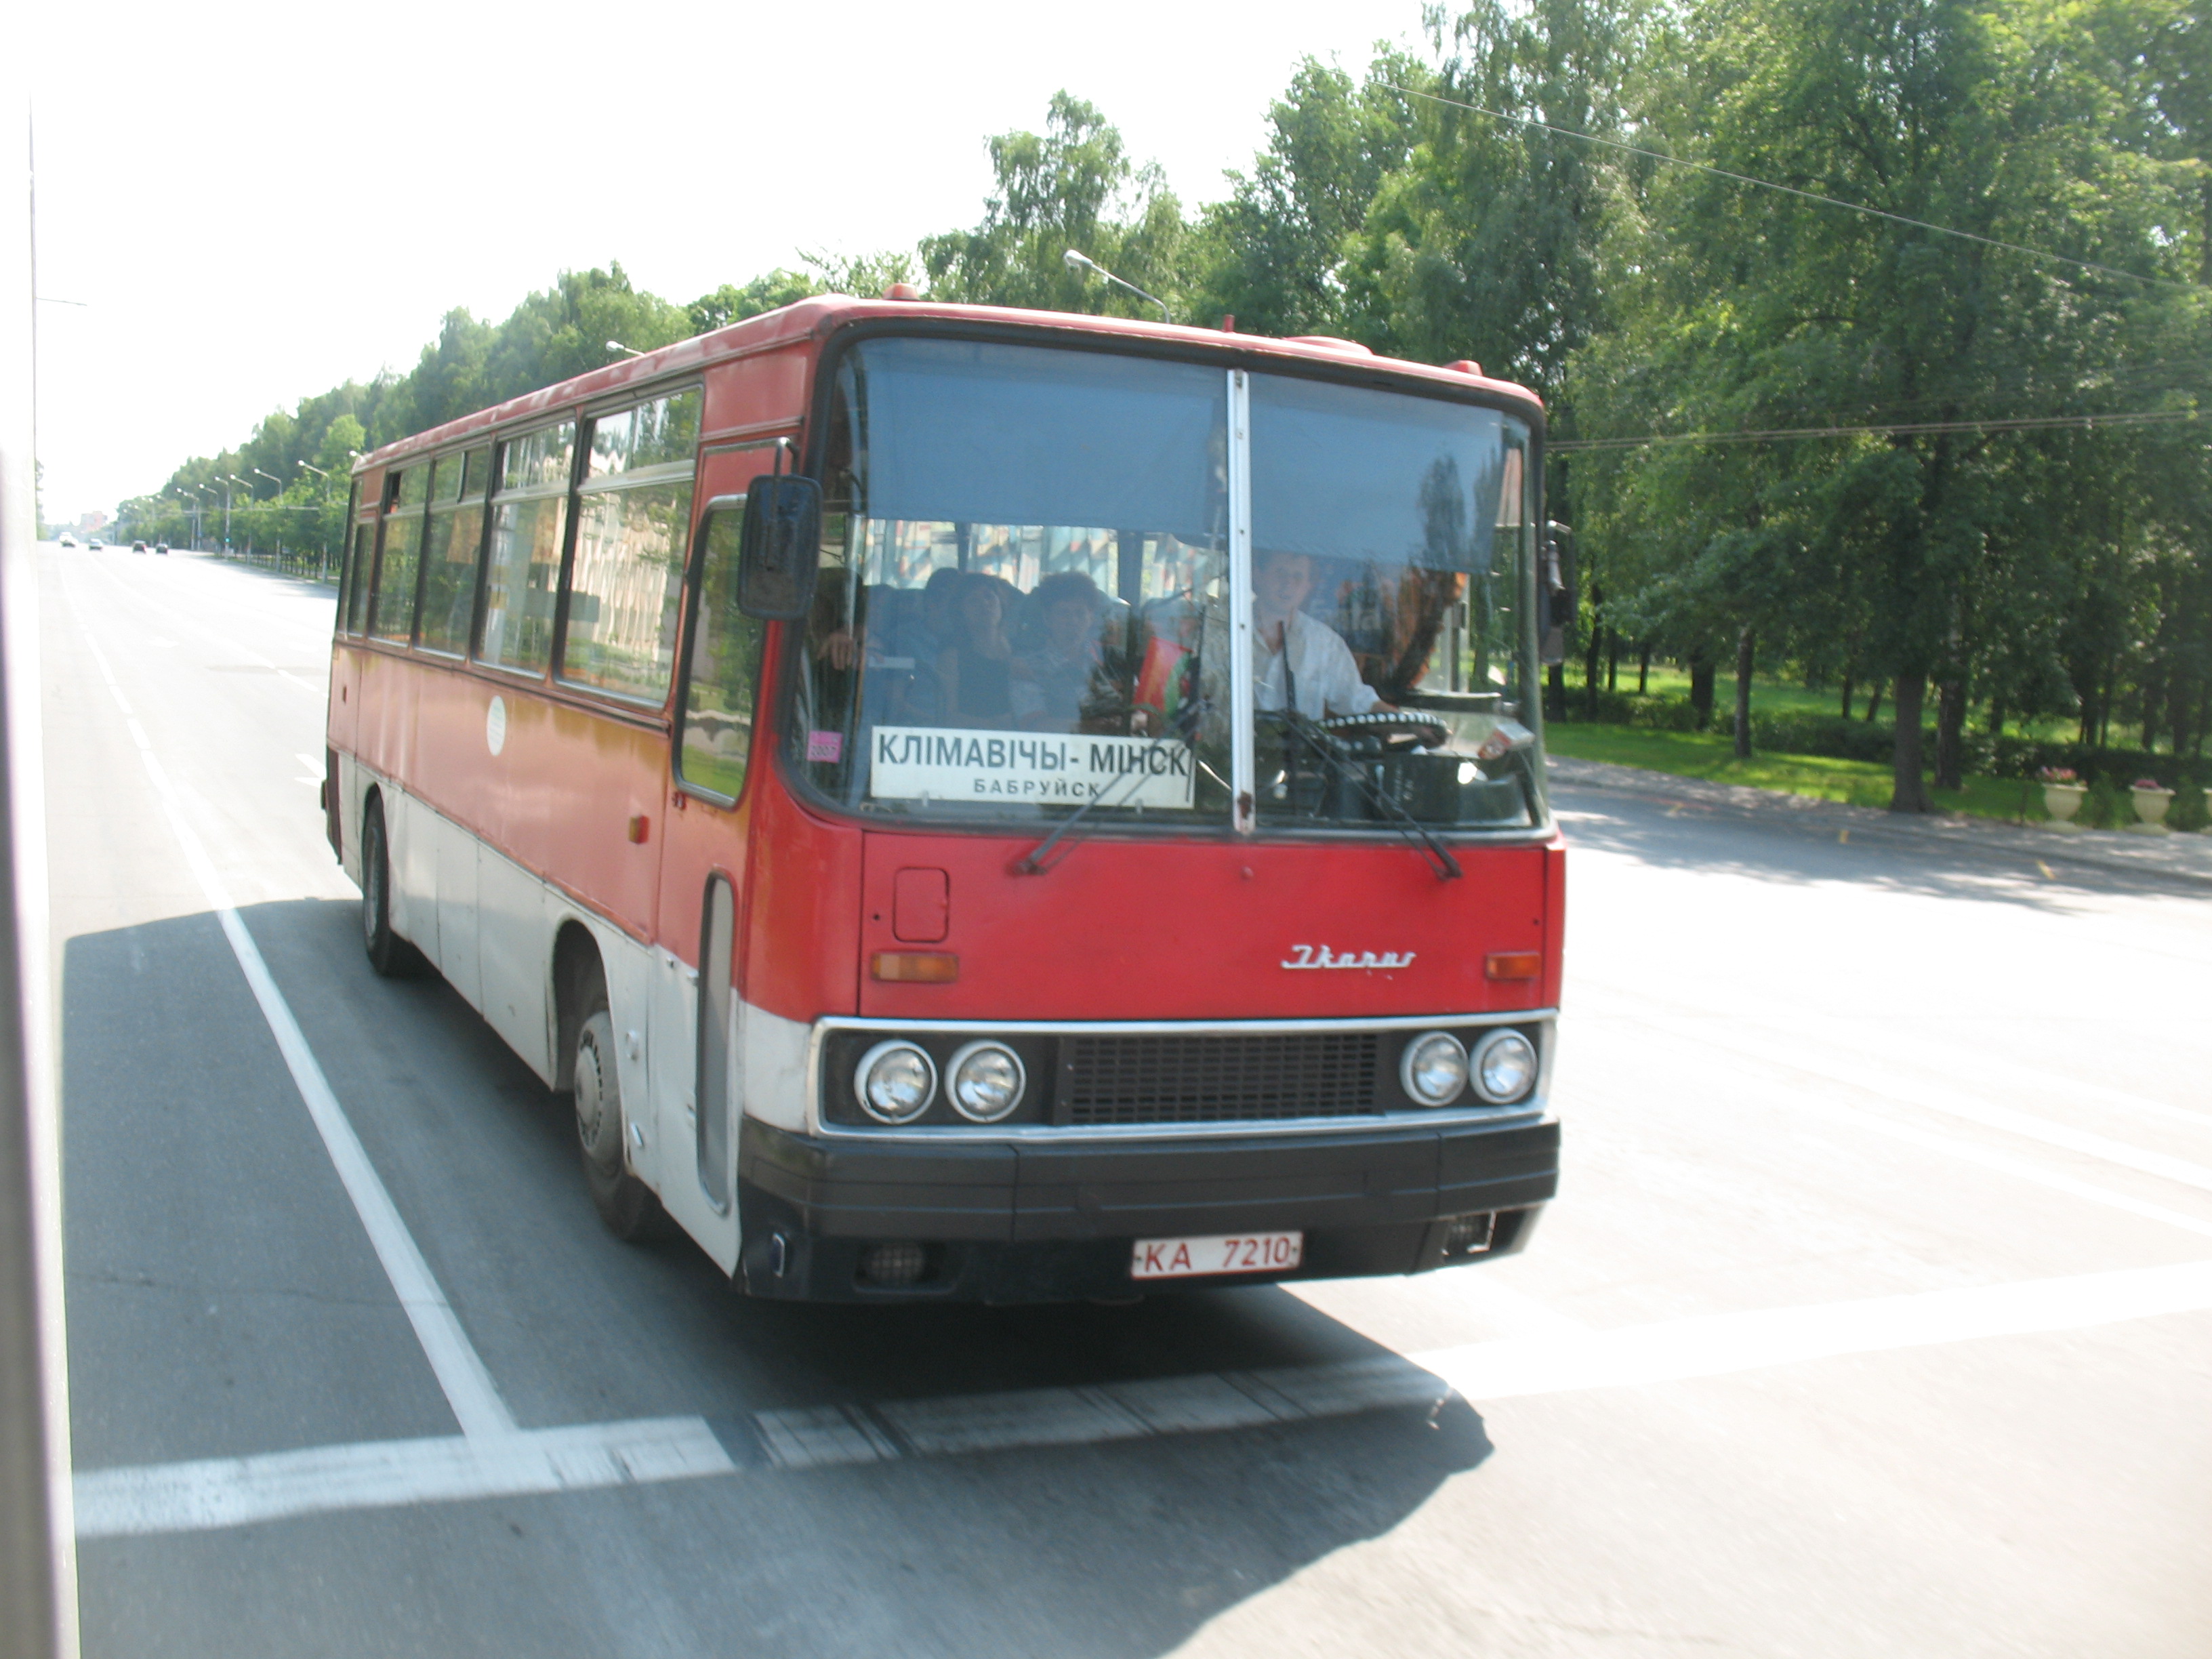 KA 7210 Ikarus 256 междугородный автобус Бобруйск - Климовичи